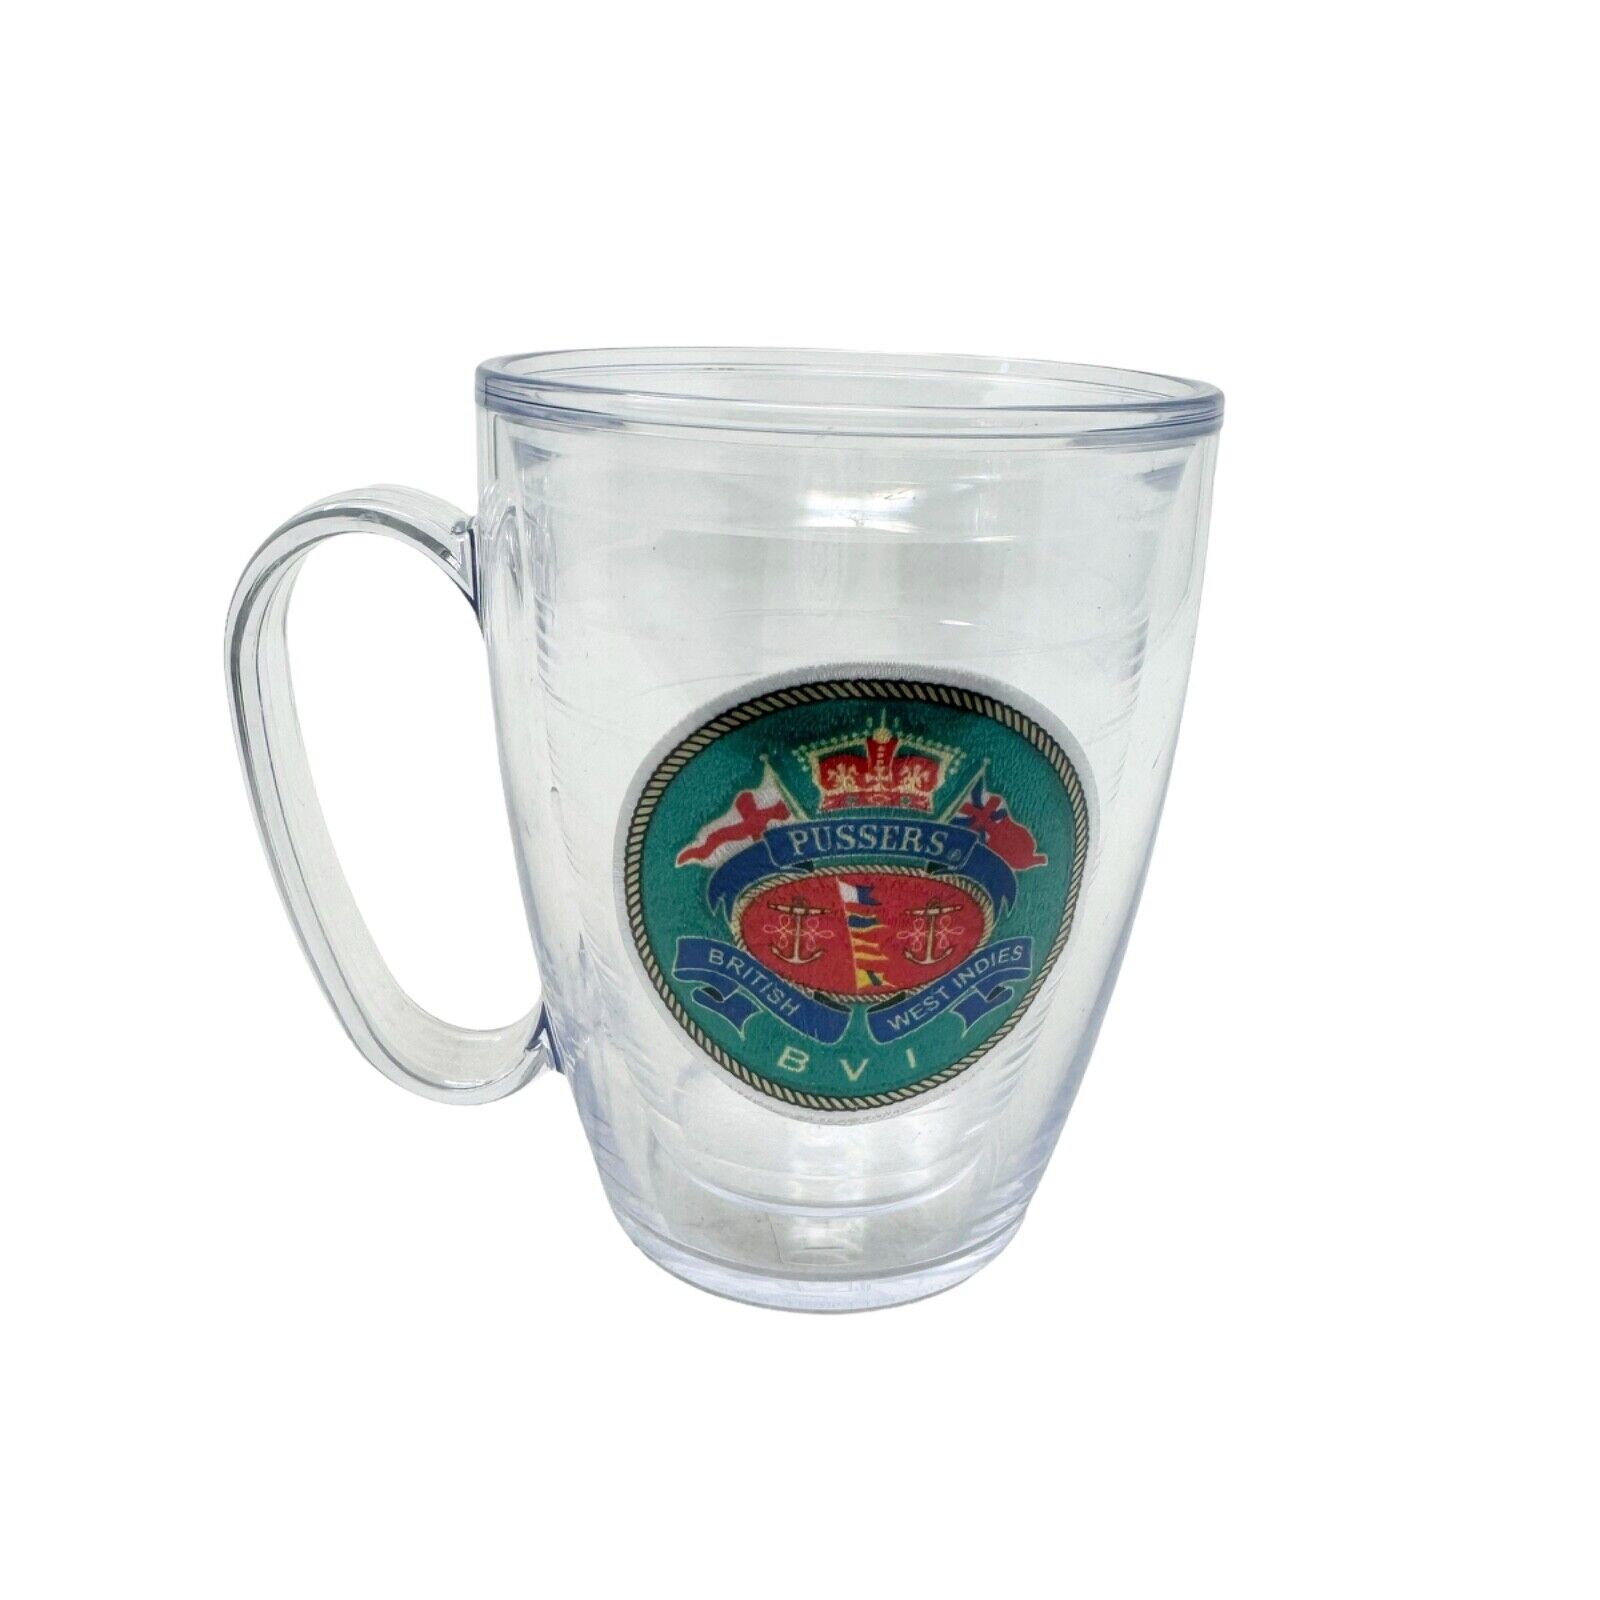 British Royal Navy Pussers Rum British Virgin Islands Tervis Tumbler mug cup